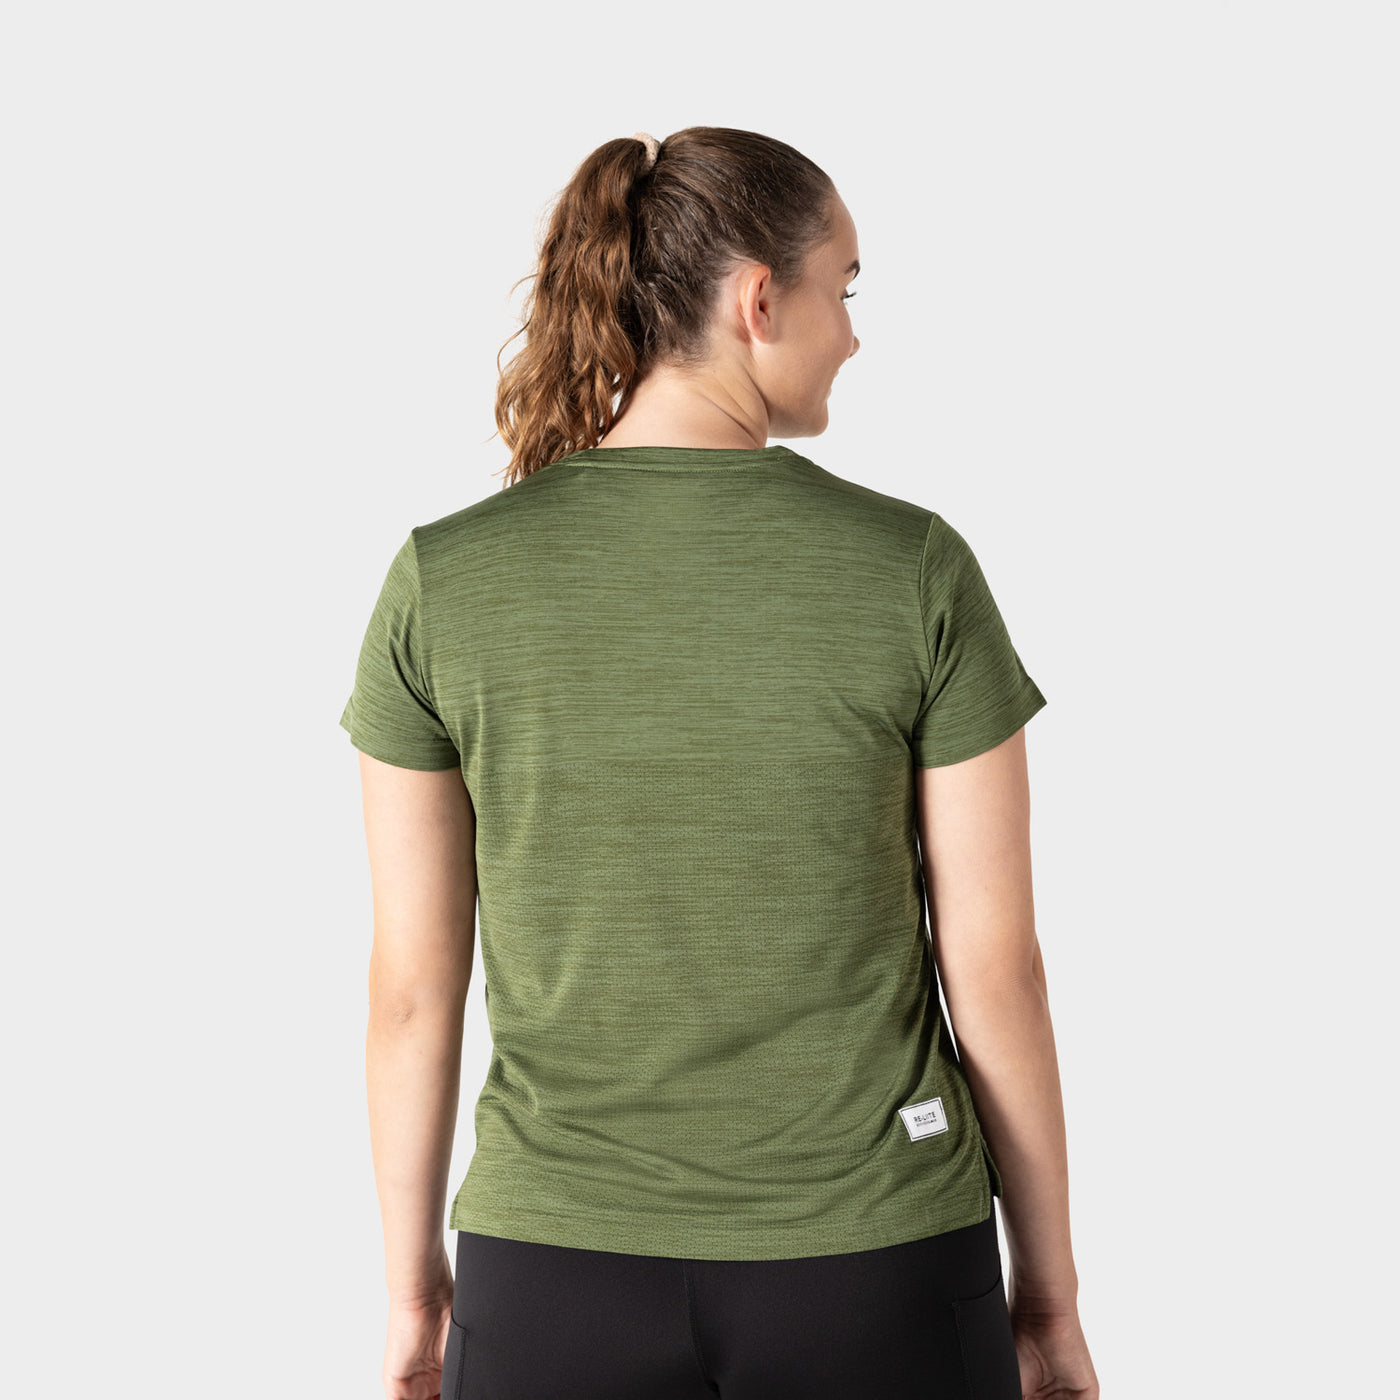 Liiteguard RE-LIITE T-SHIRT (Women) T-shirts GREEN